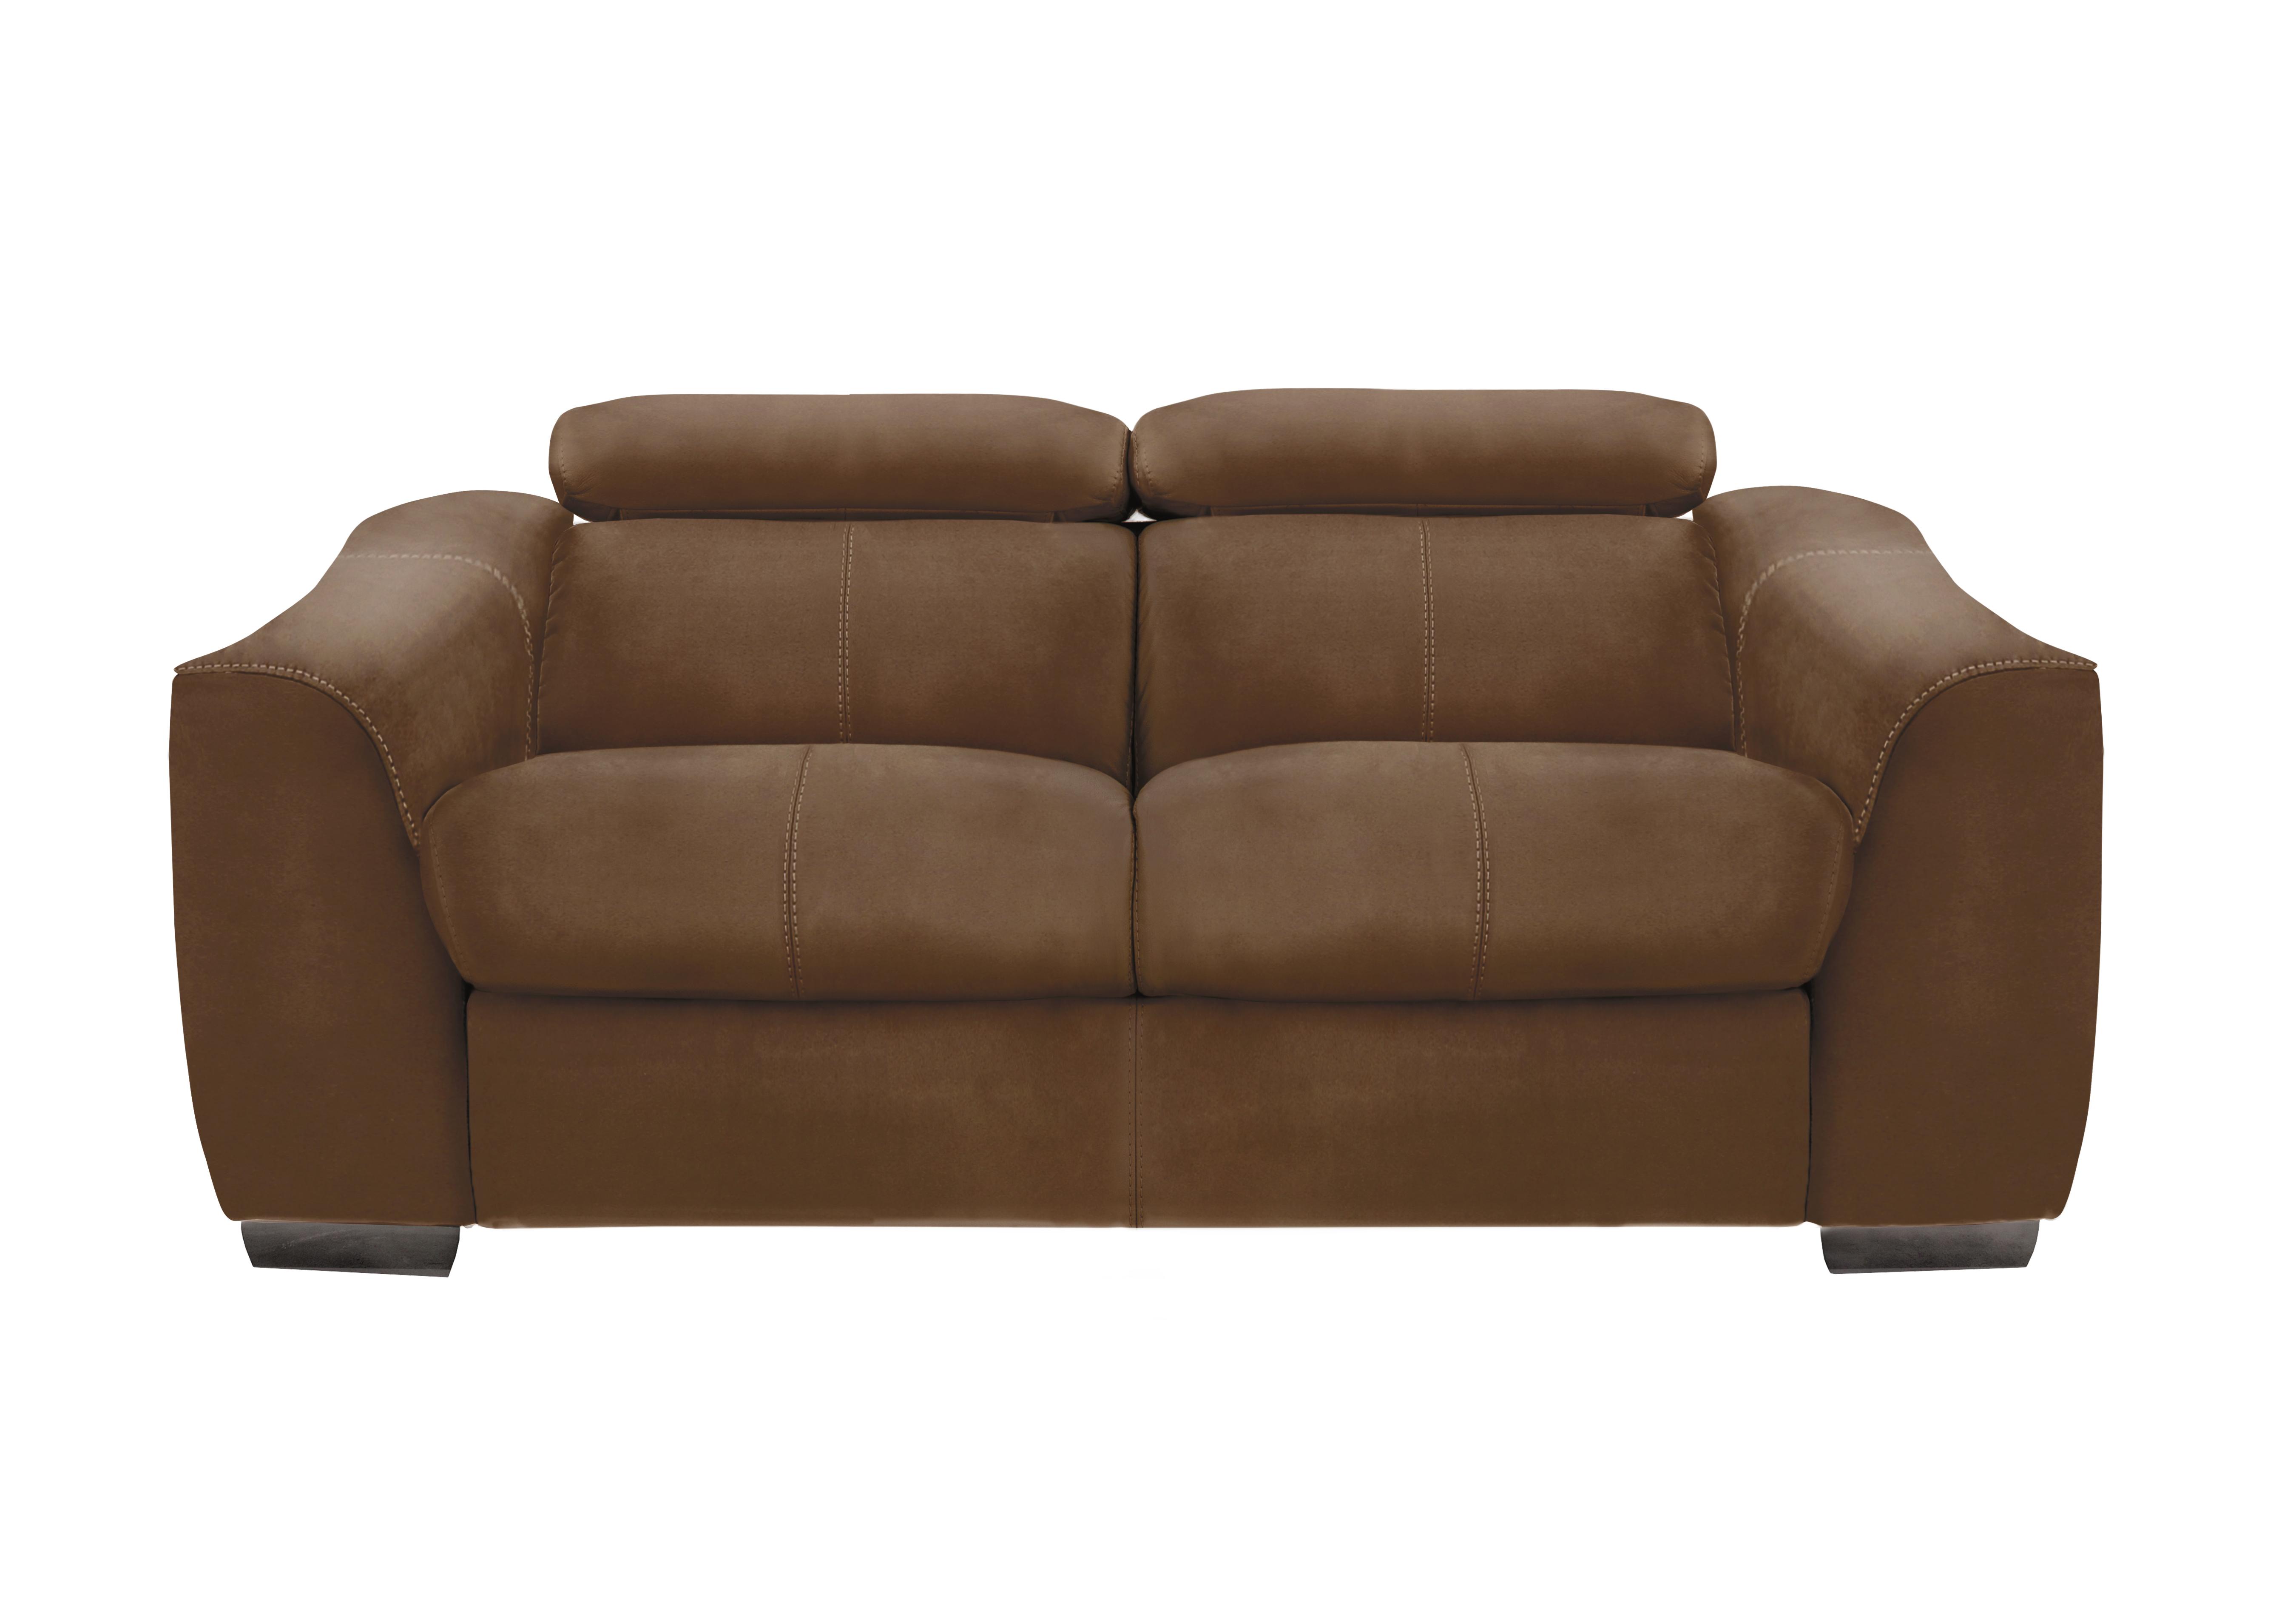 Elixir 2 Seater Fabric Sofa in Bfa-Blj-R05 Hazelnut on Furniture Village